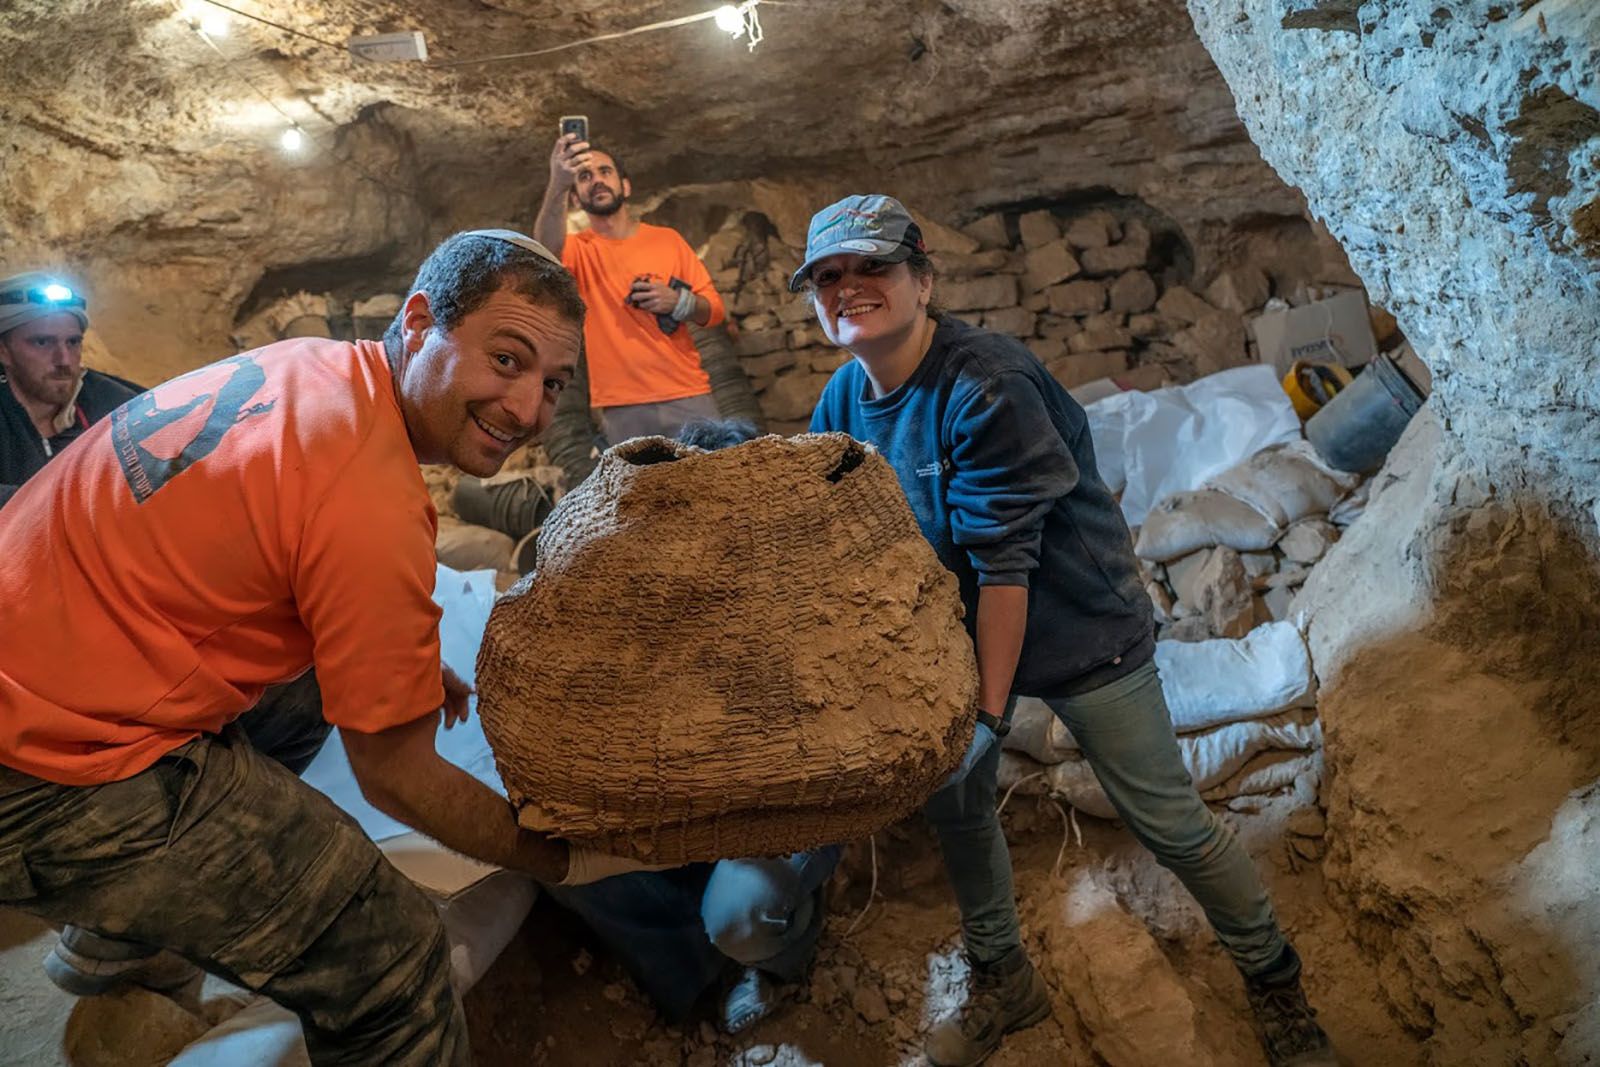 Dead Sea Scroll fragments found in desert cave | CNN